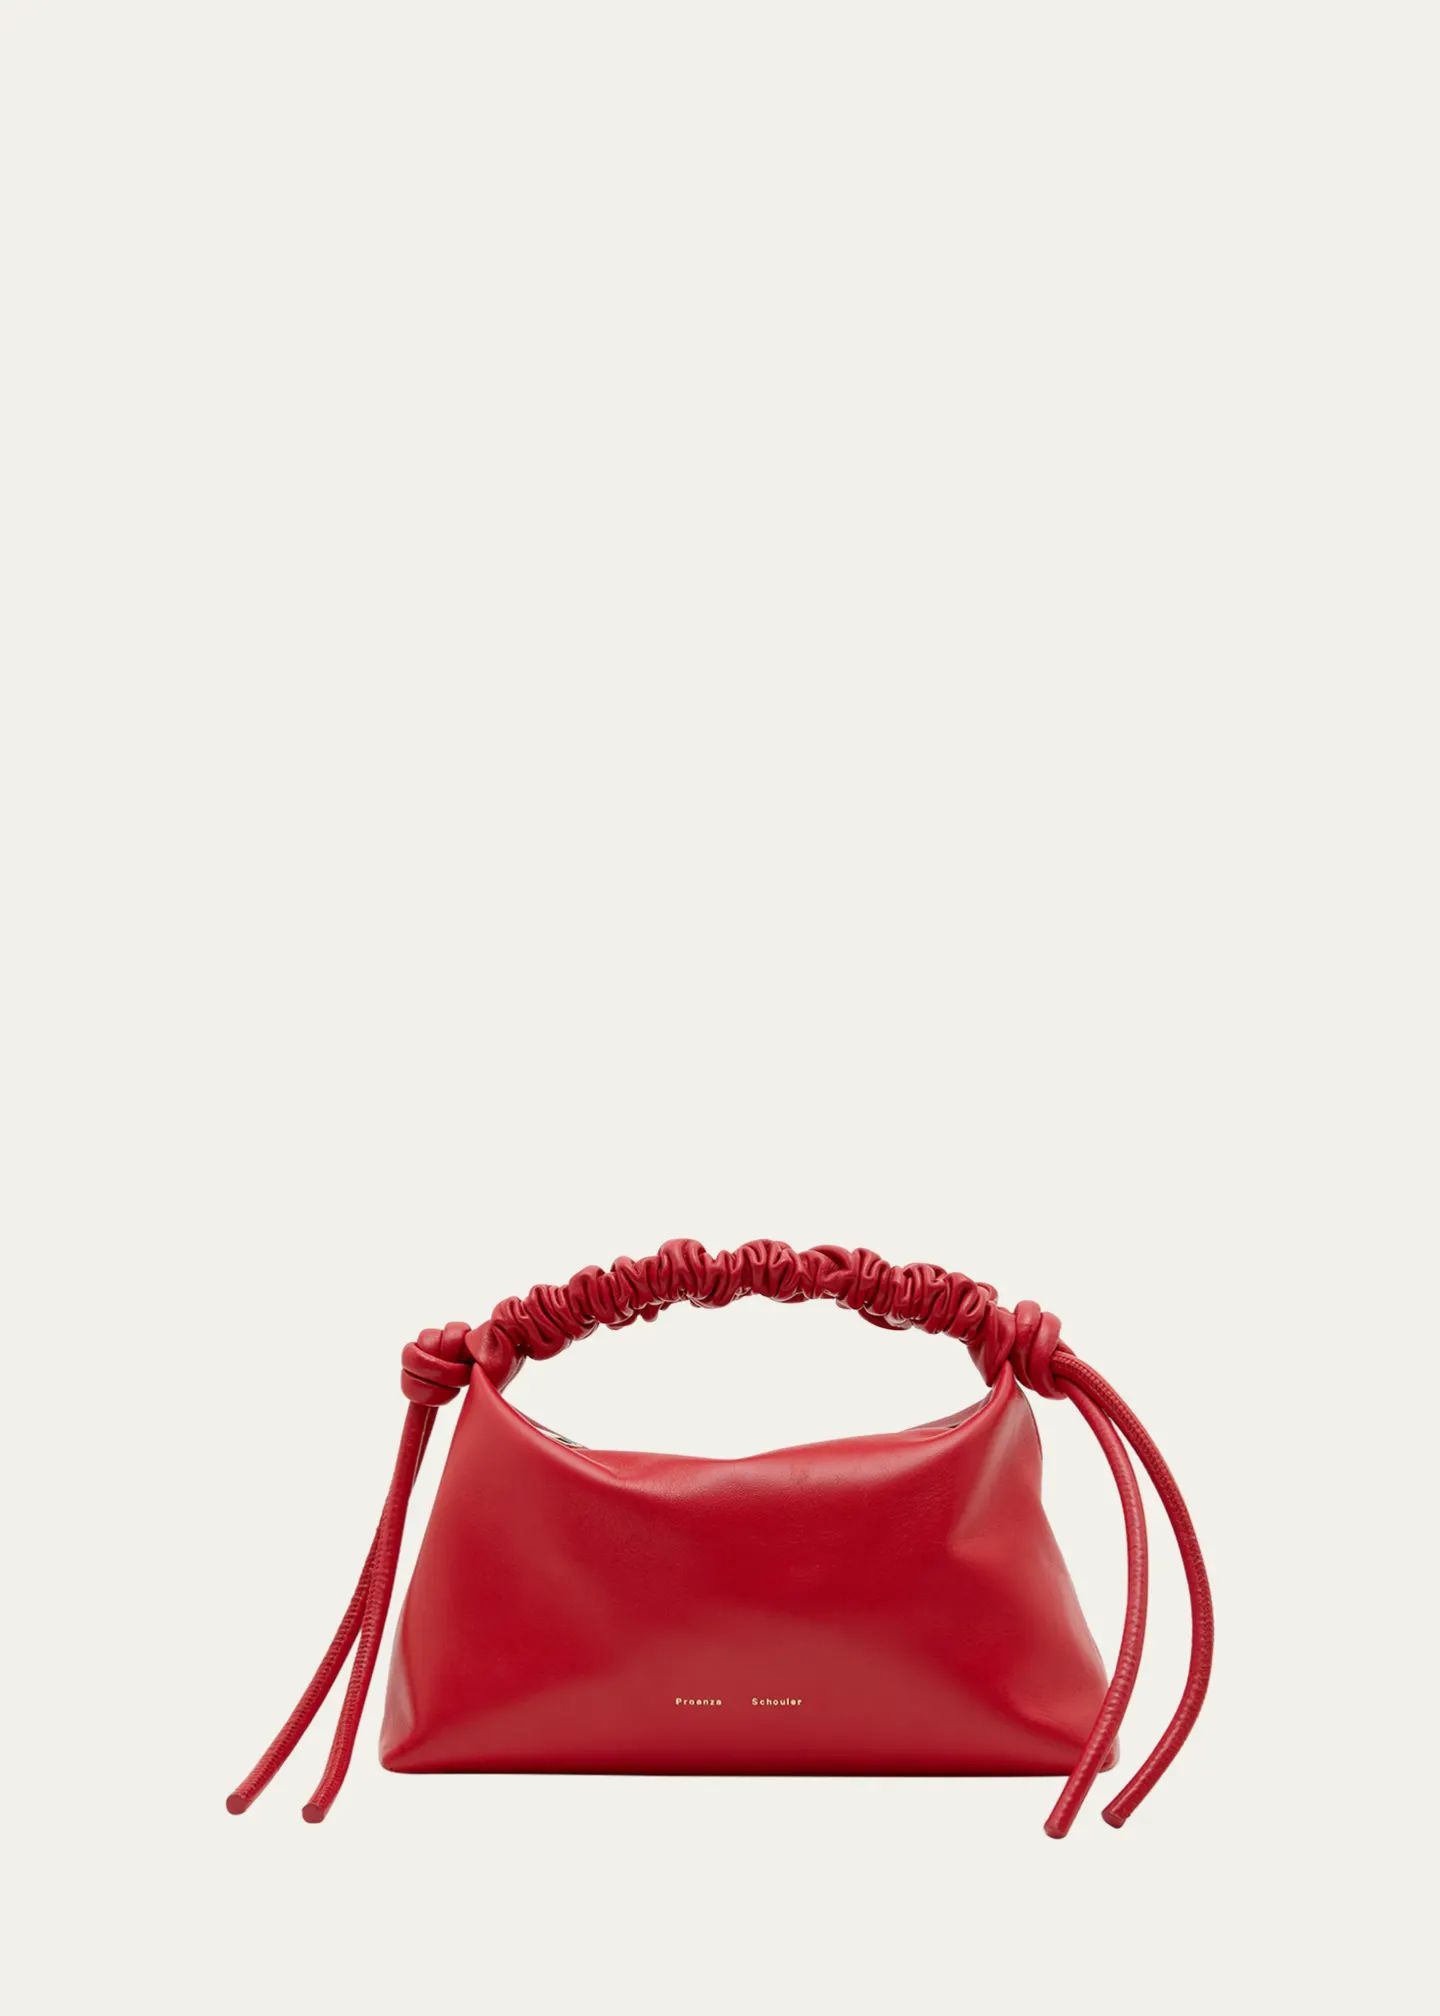 Handbag woman 2022 new women's bag| Alibaba.com